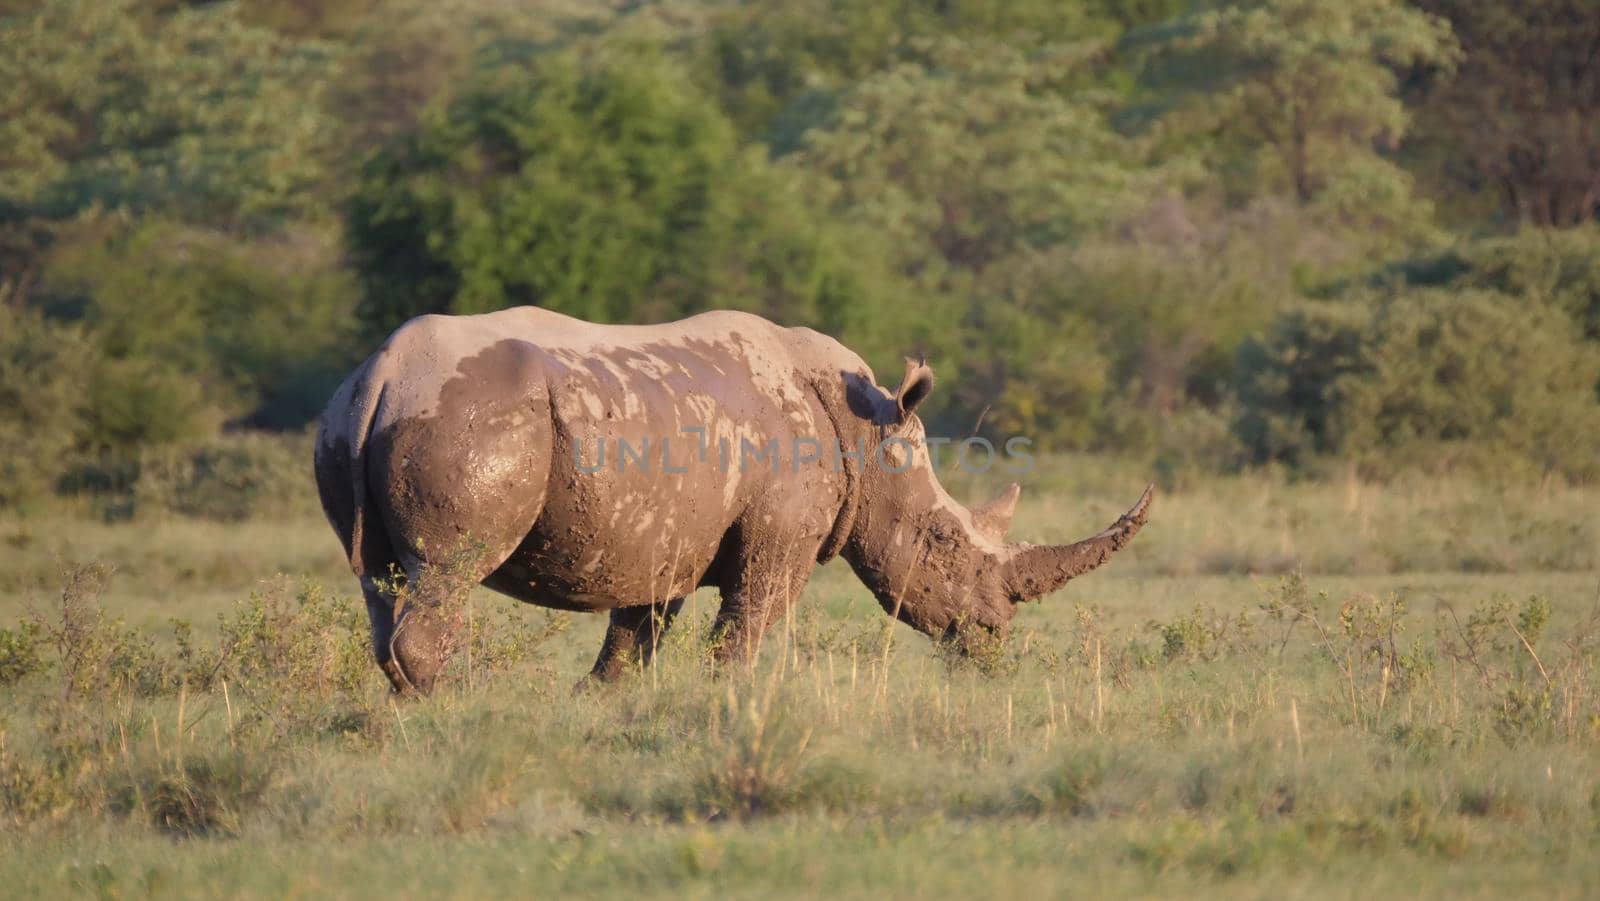 Muddy rhino on the savanna  by traveltelly